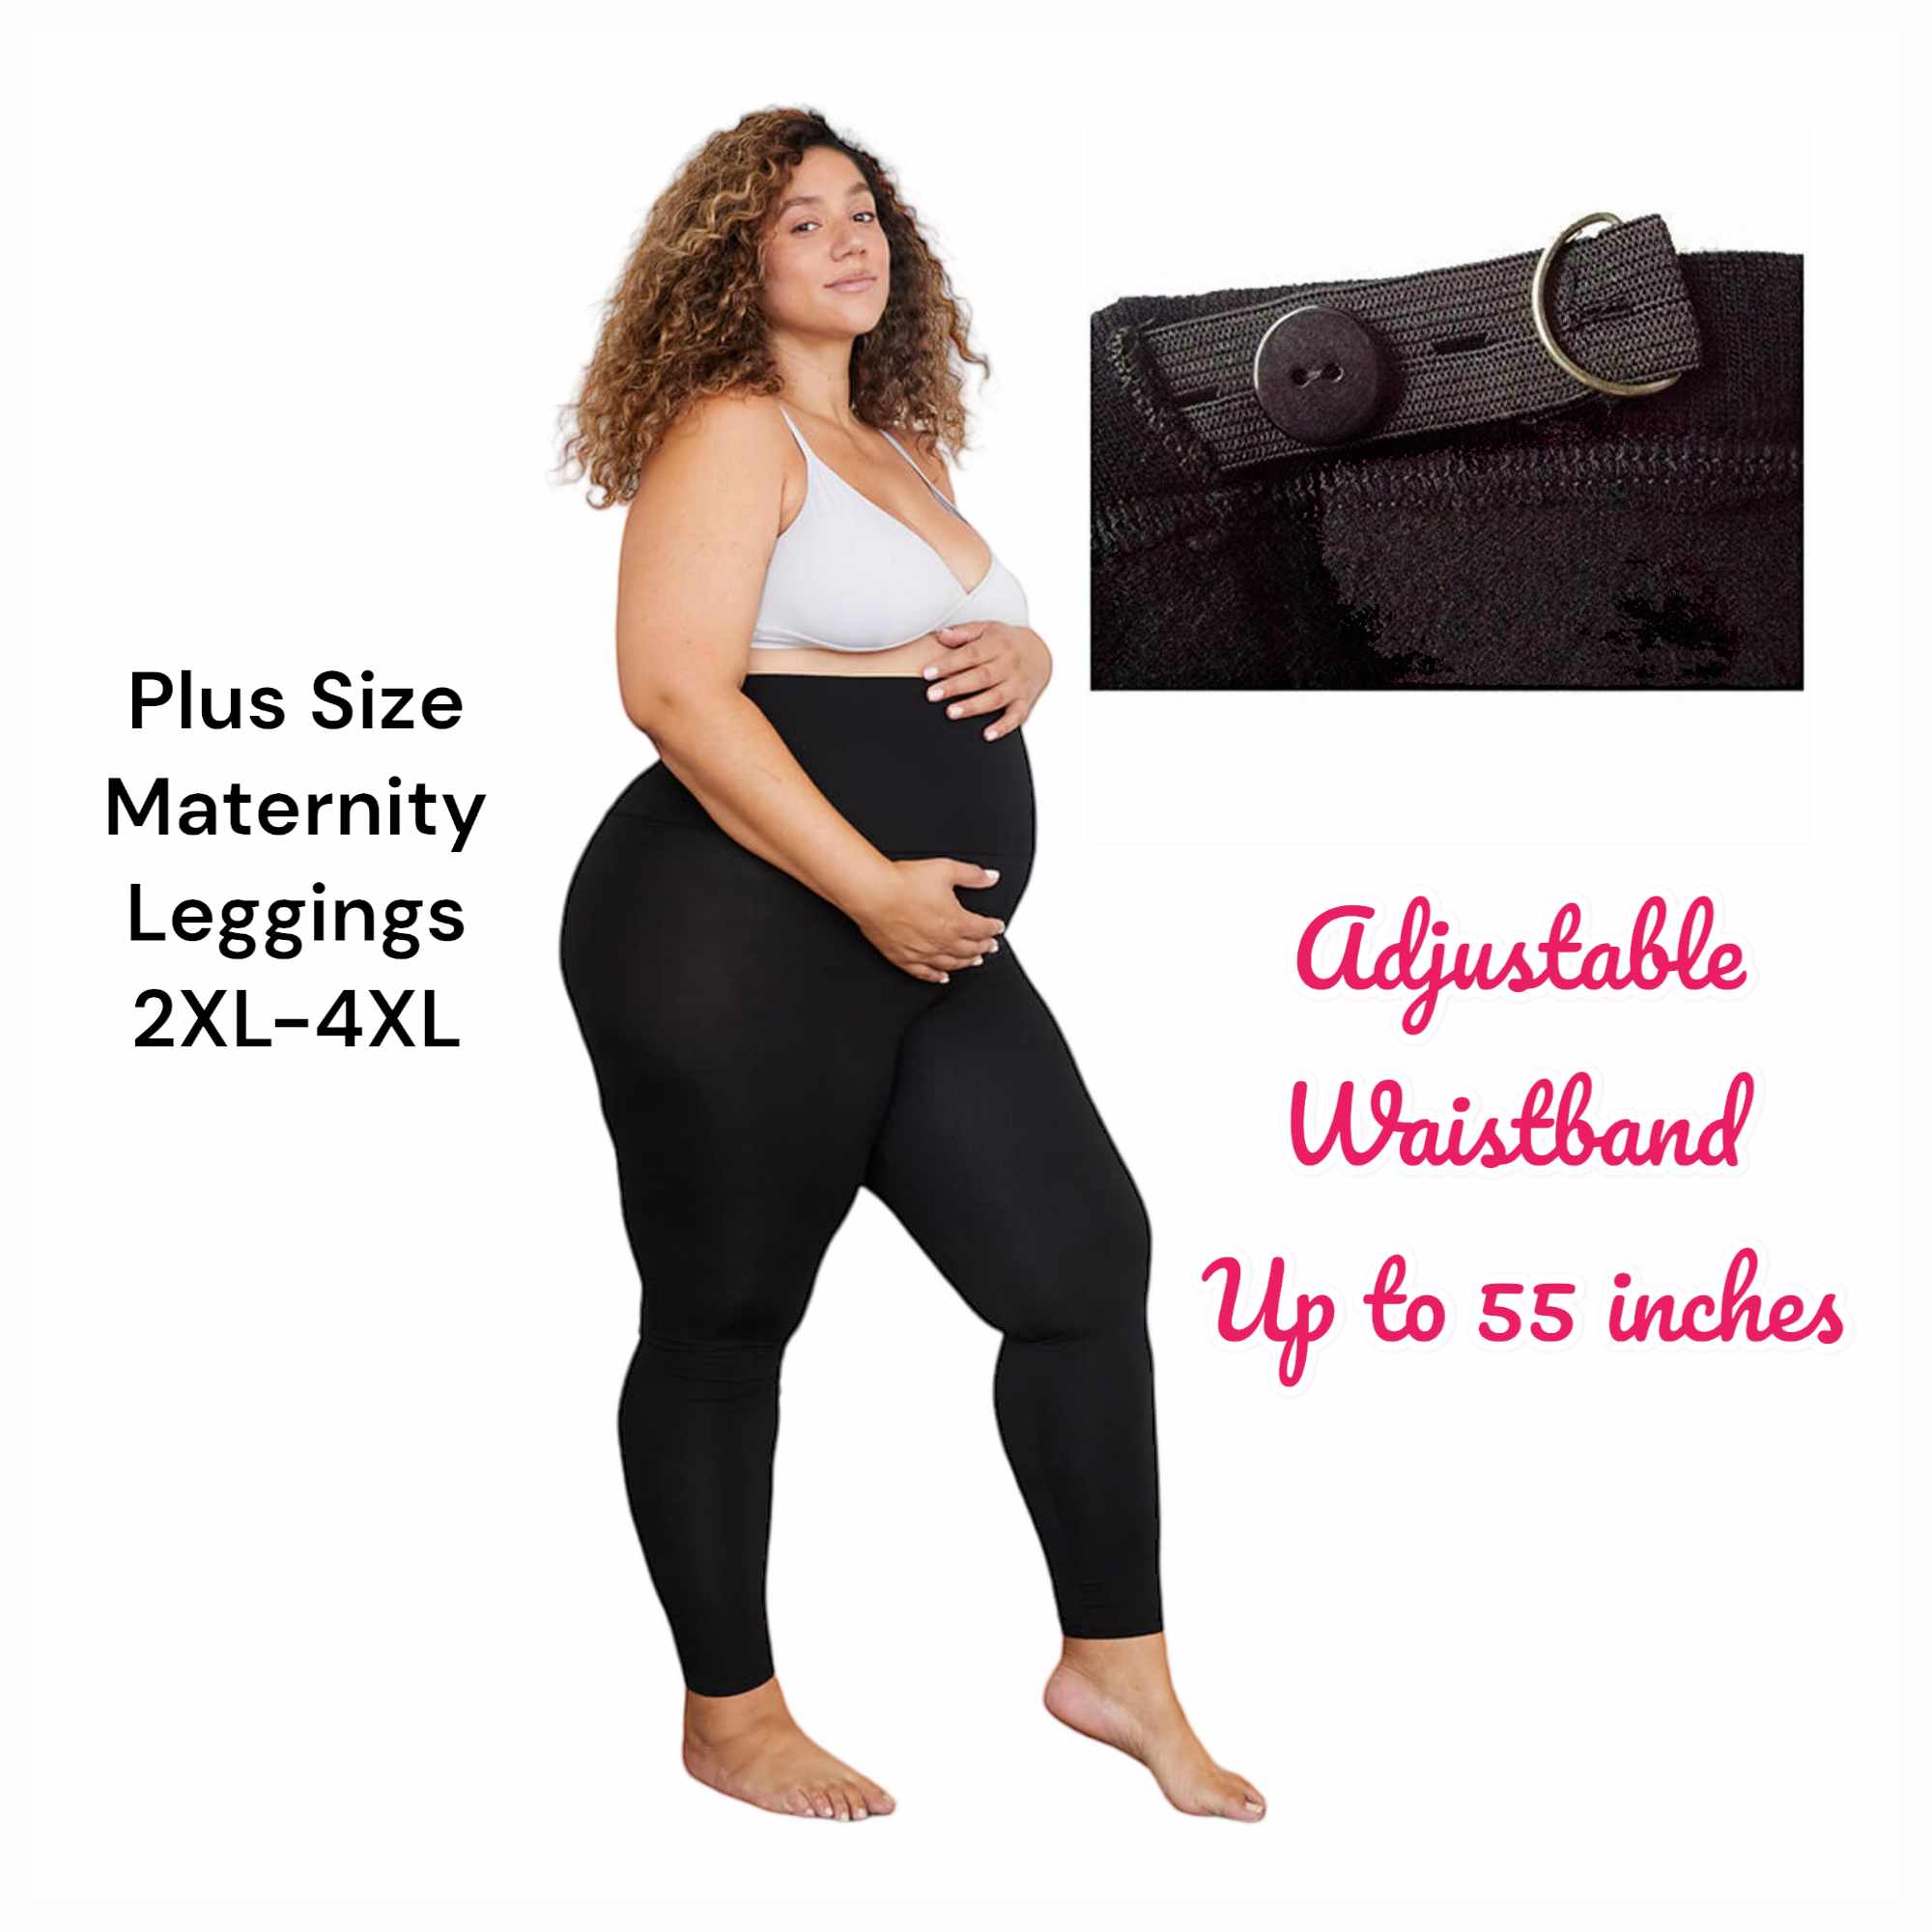 Plus Size Maternity Leggings Adjustable & Stretchable Garter Waist fits 2XL-4XL